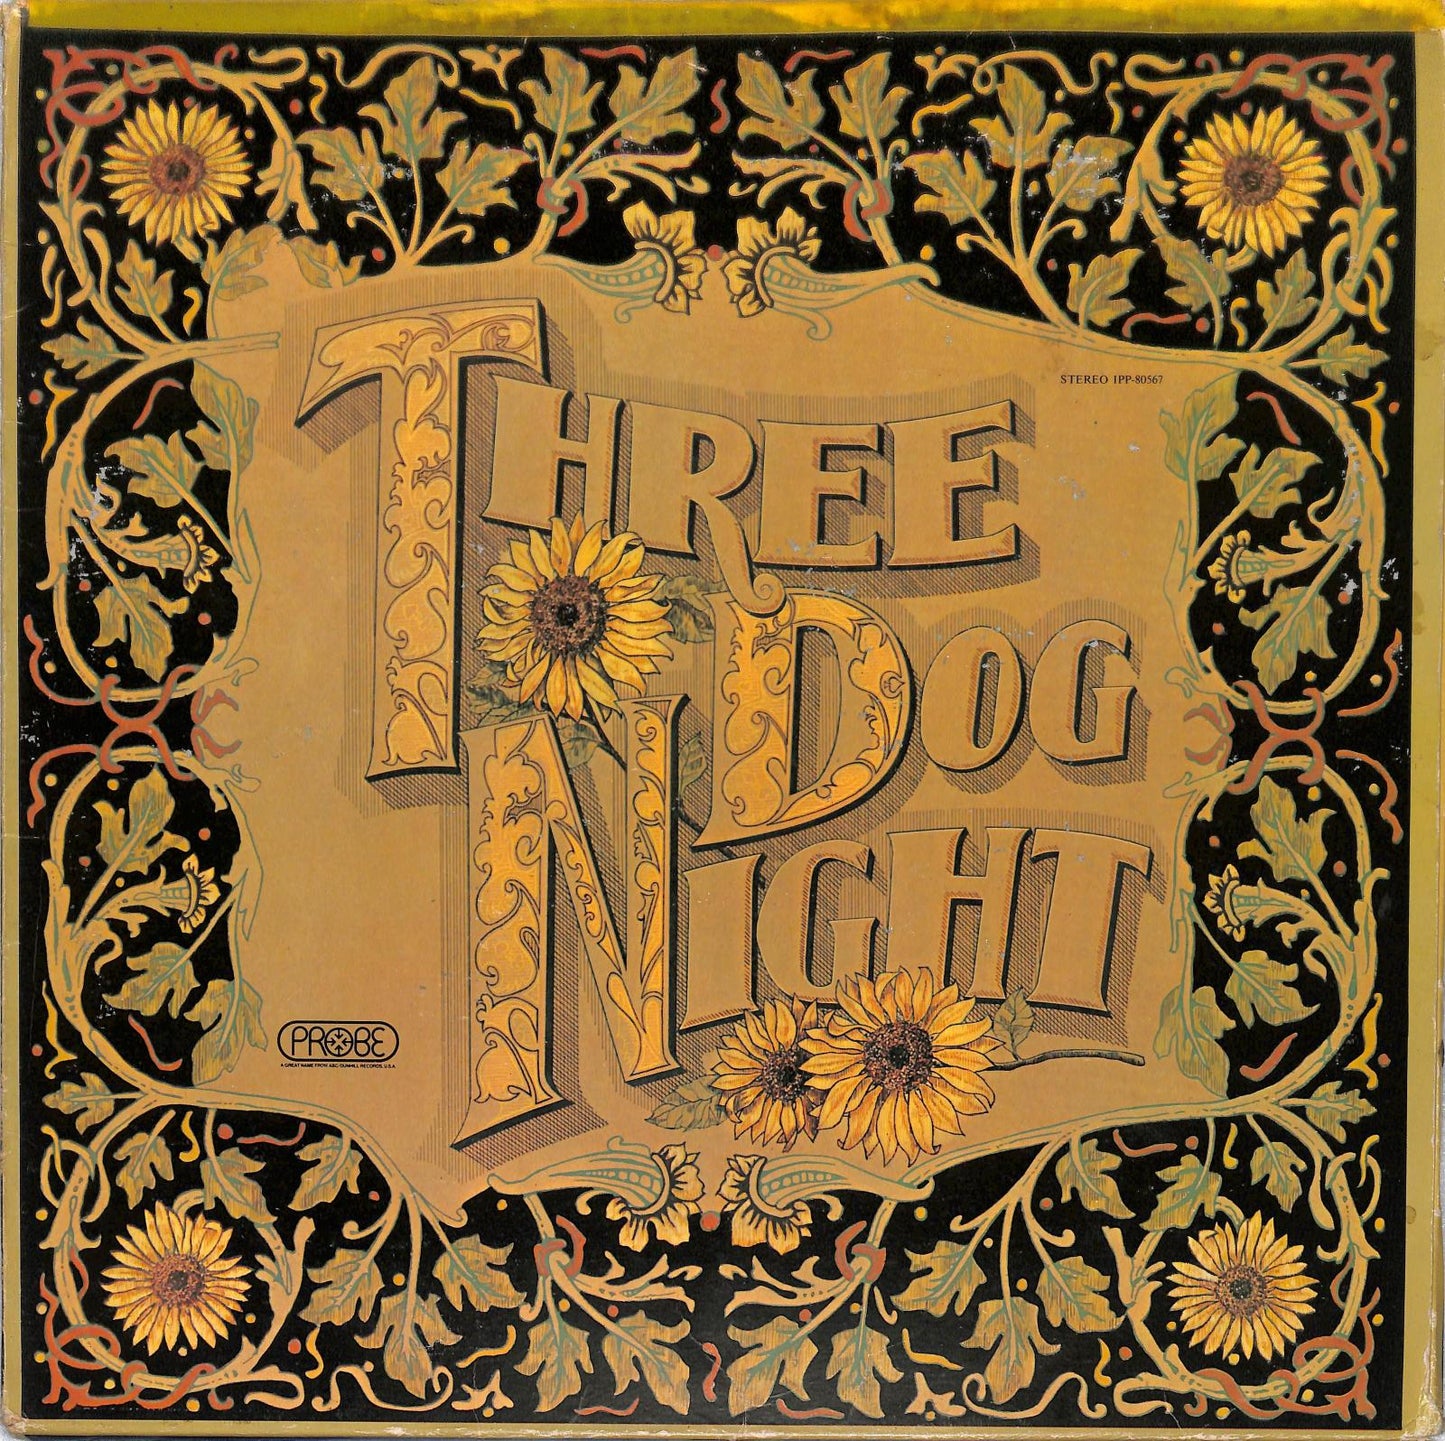 THREE DOG NIGHT - Seven Separate Fools